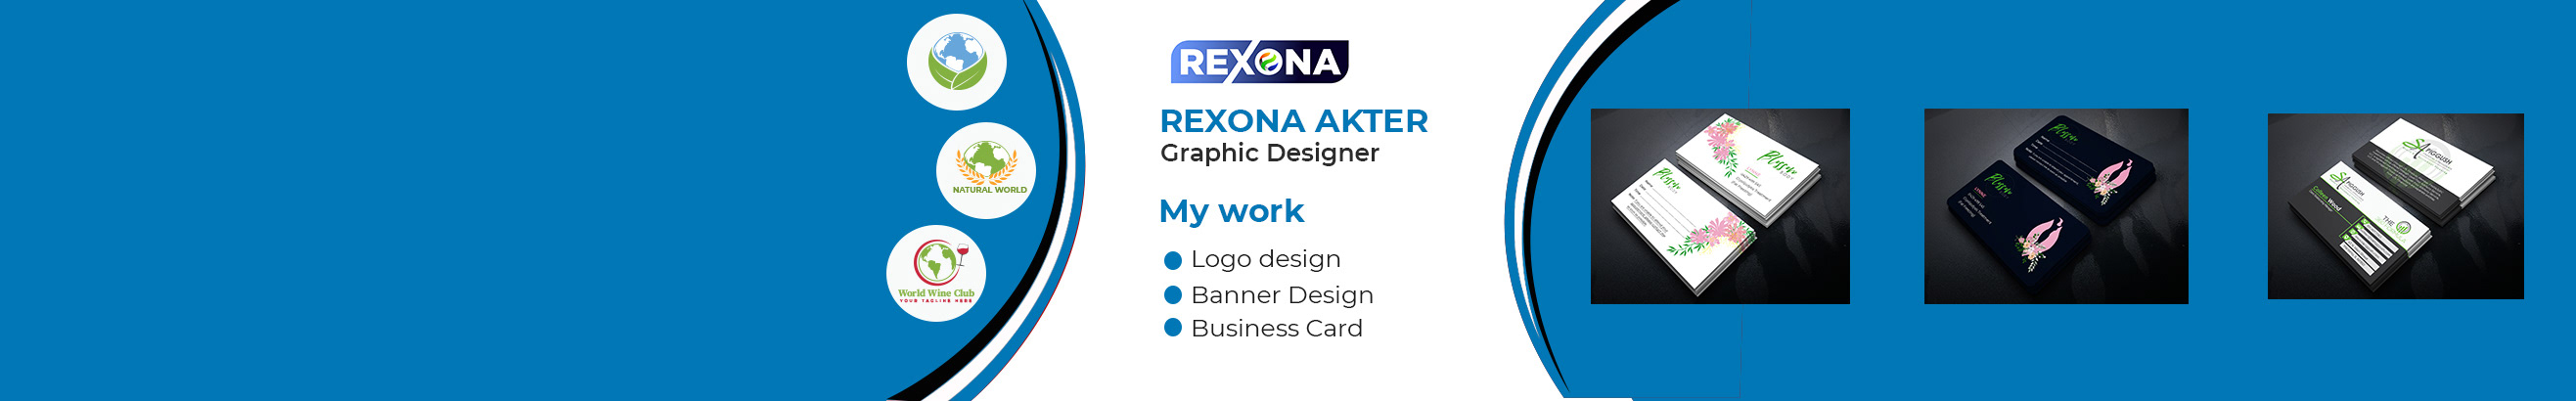 Profielbanner van Rexona Akter